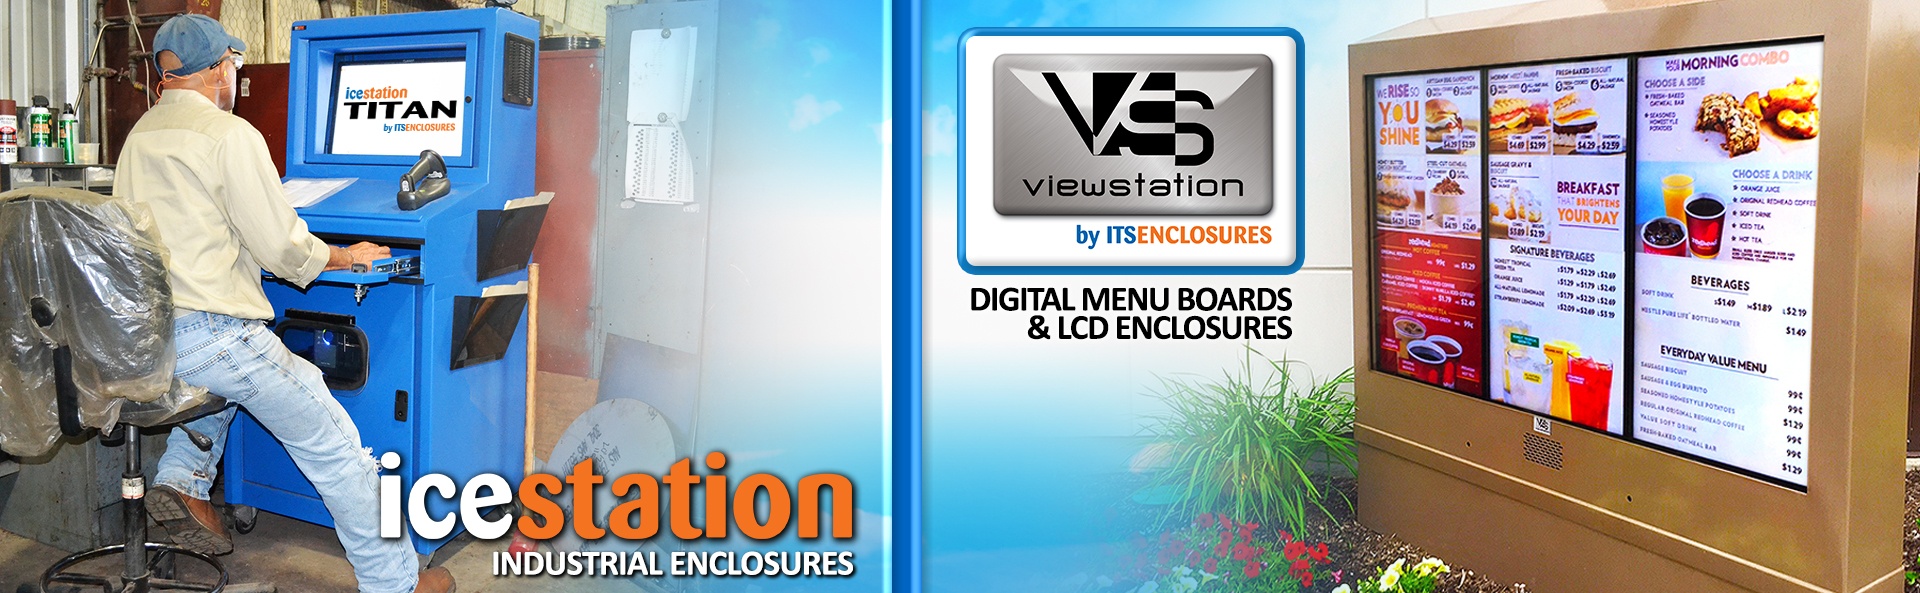 VIEWSTATION_ICESTATION_ITSENCLOSURES_COMPUTER_ENCLOSURES_LCD_DIGITAL.jpg